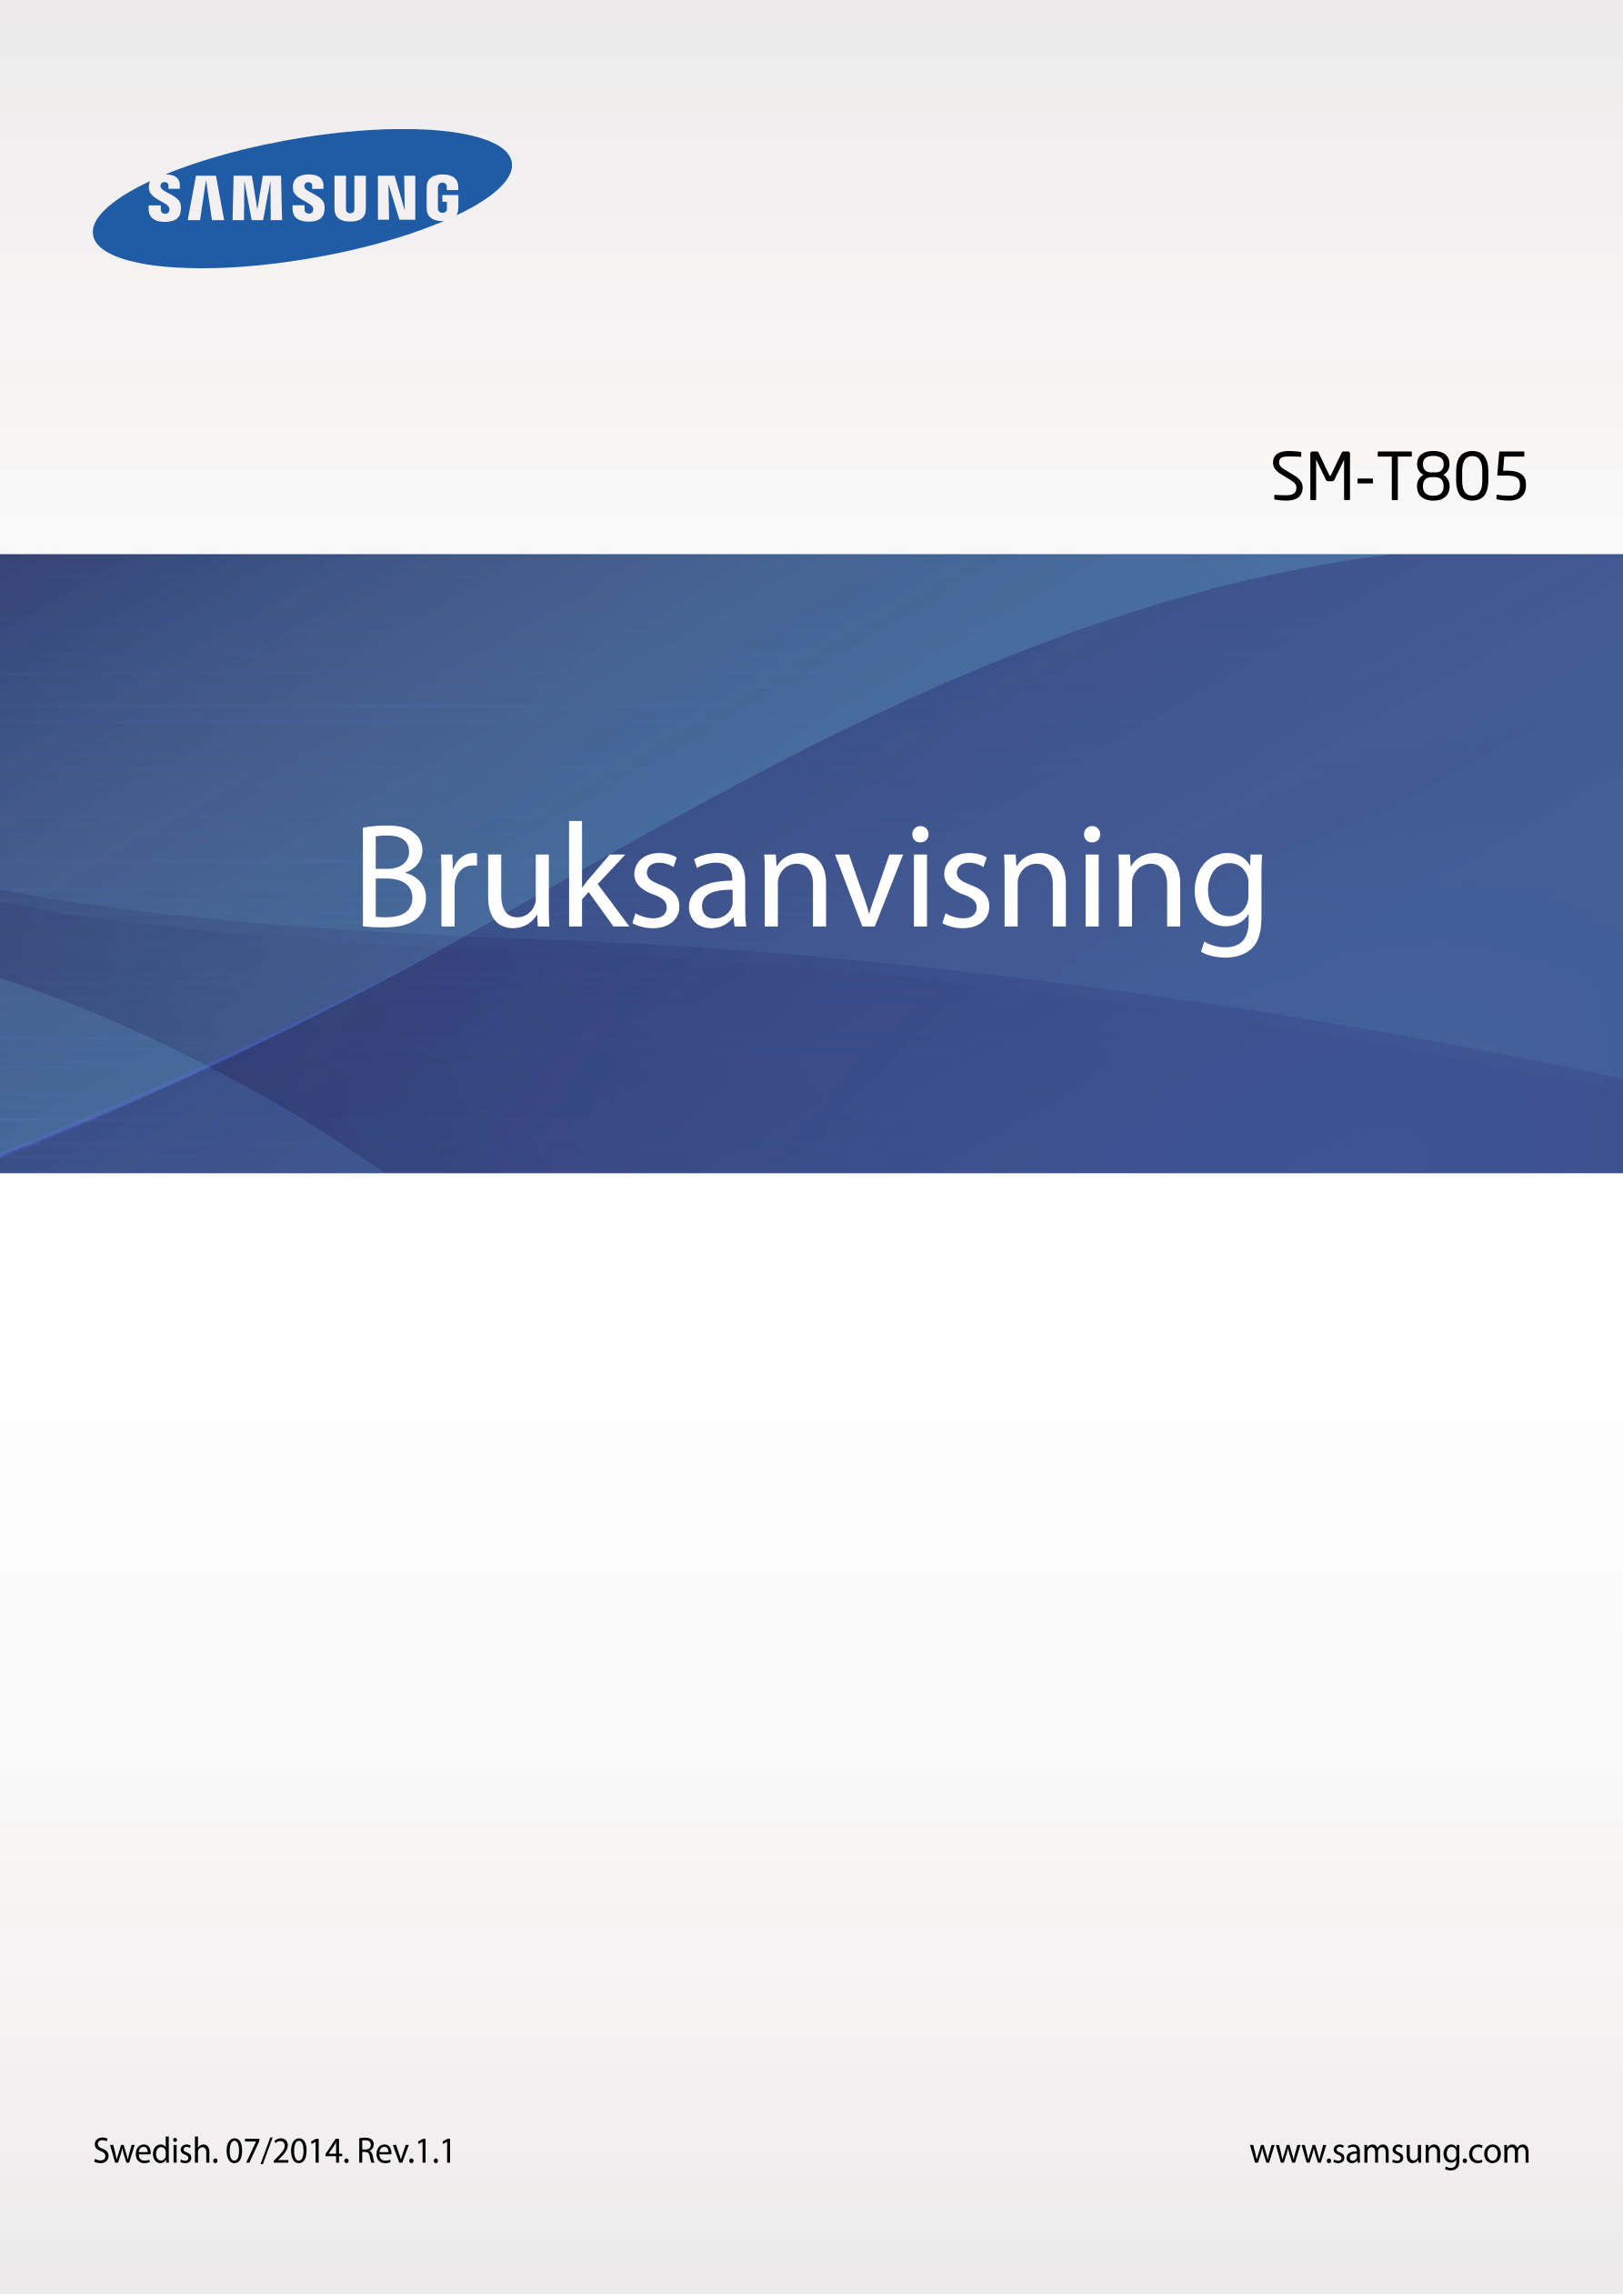 SM-T805
Bruksanvisning
Swedish. 07/2014. Rev.1.1 www.samsung.com